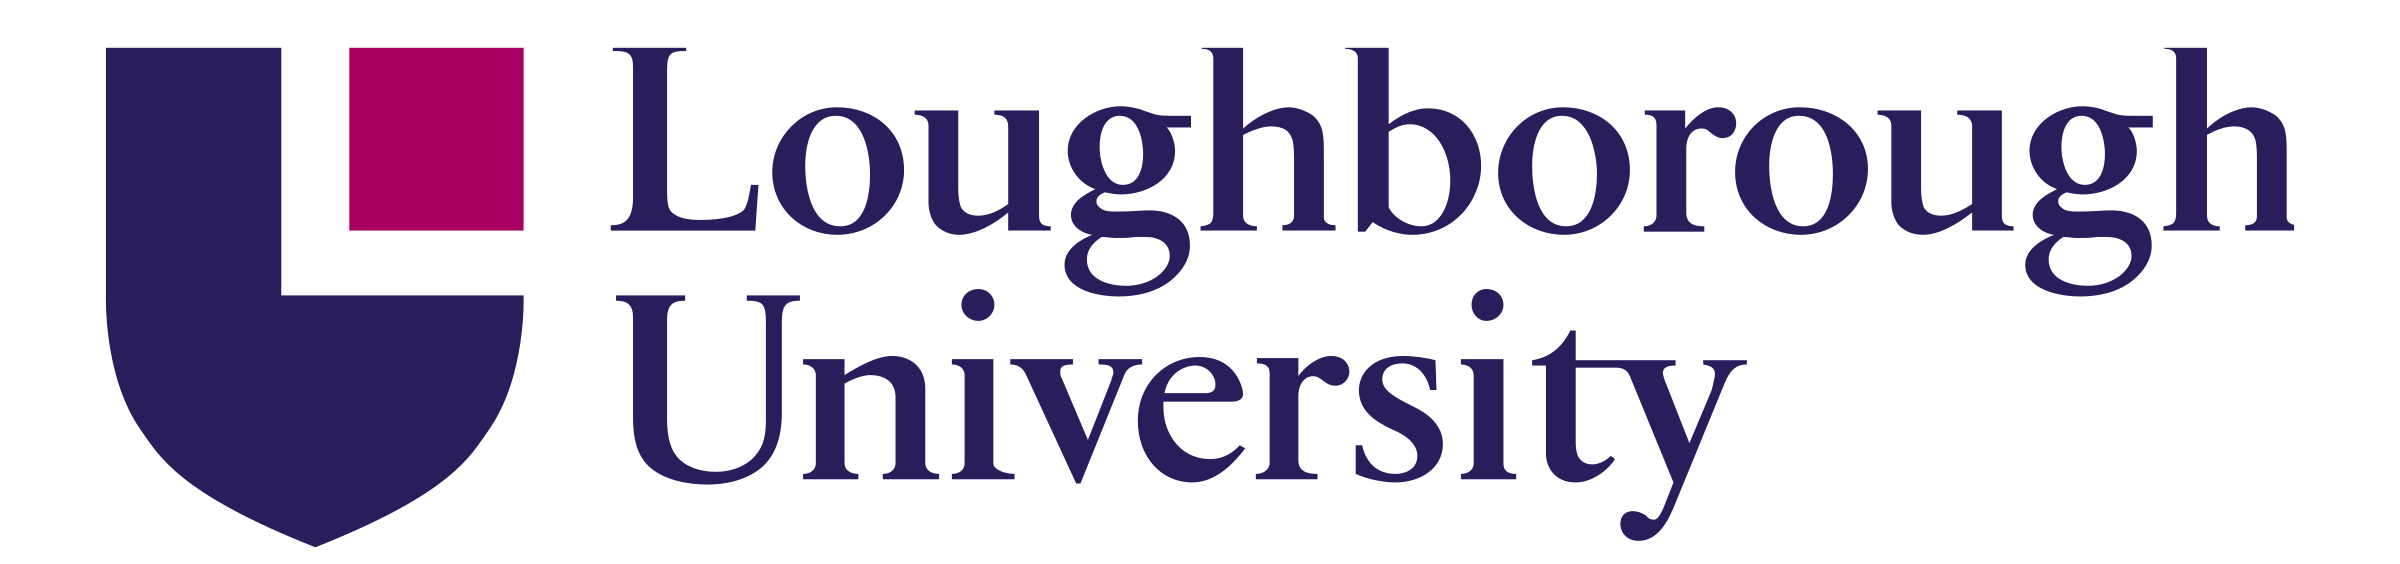 loughborough-university-logo-png-transparent